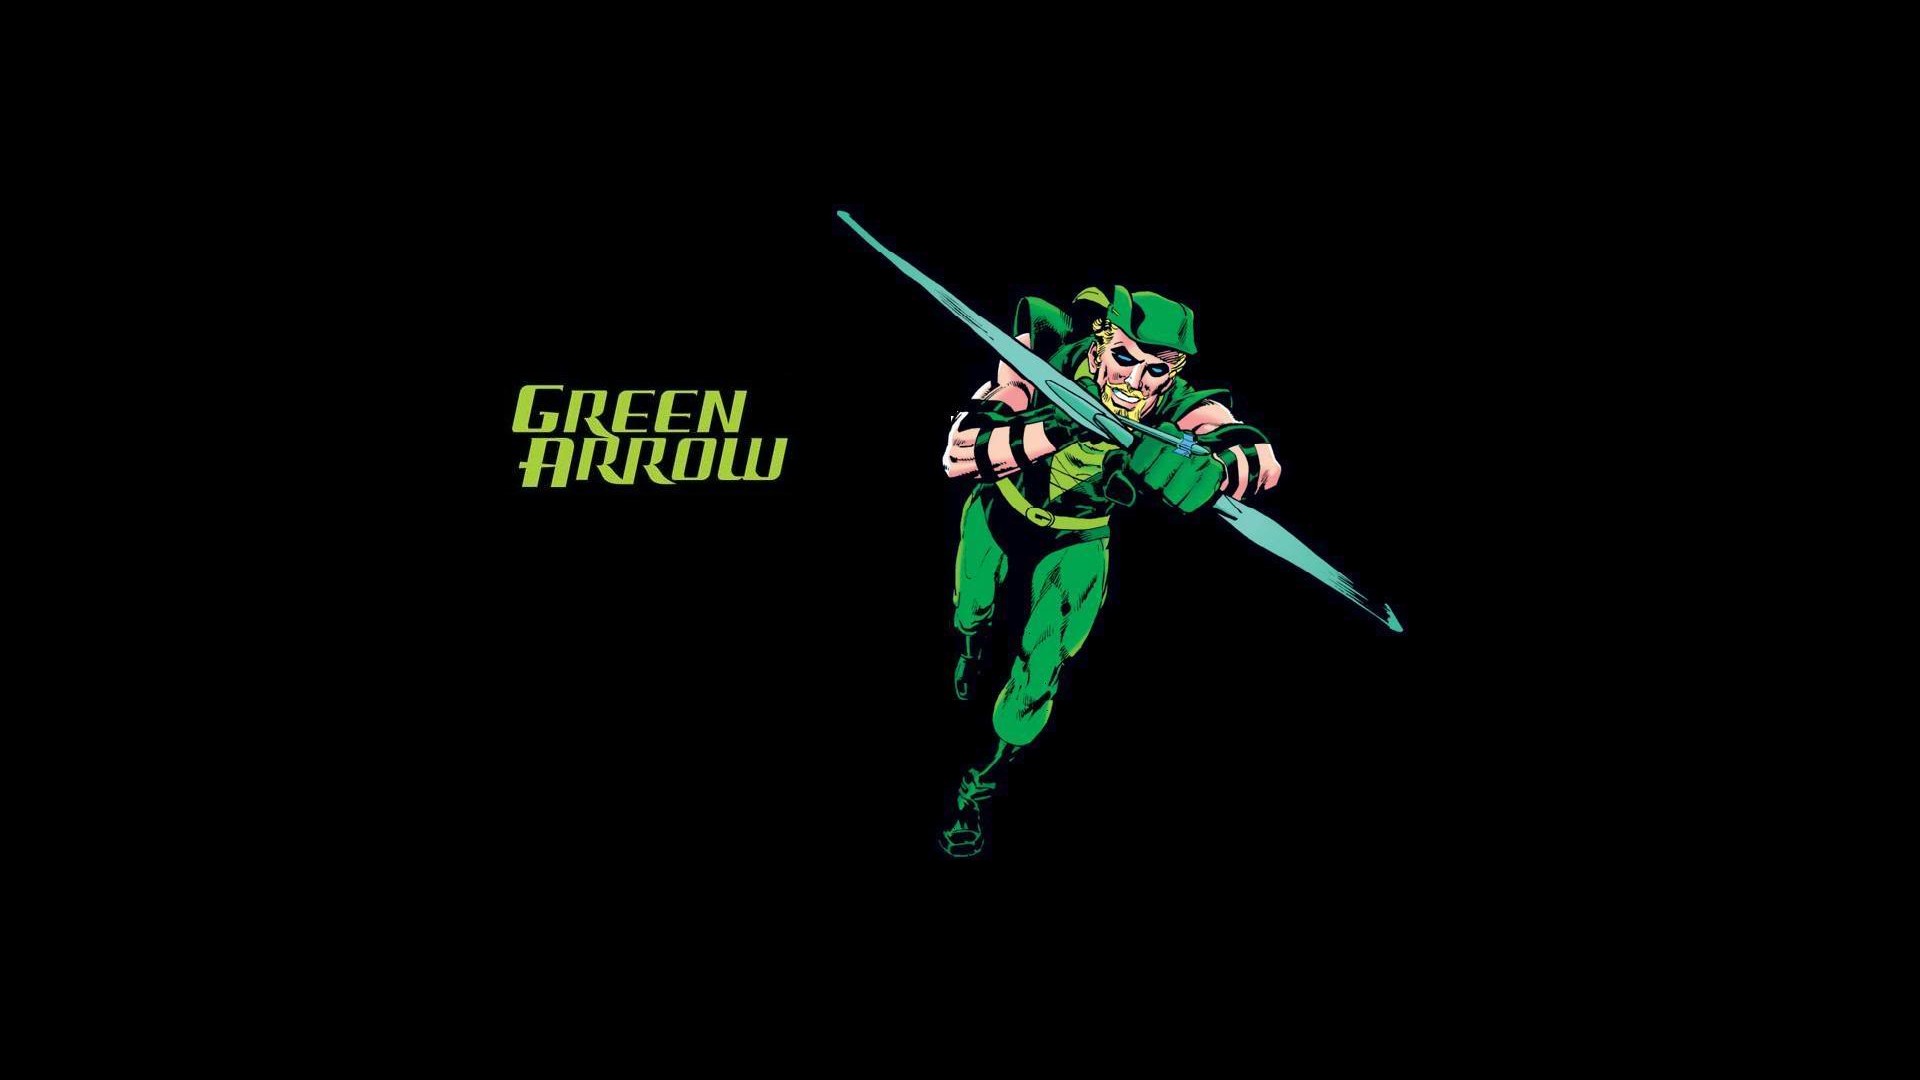 Green Arrow Wallpaper Direct Link